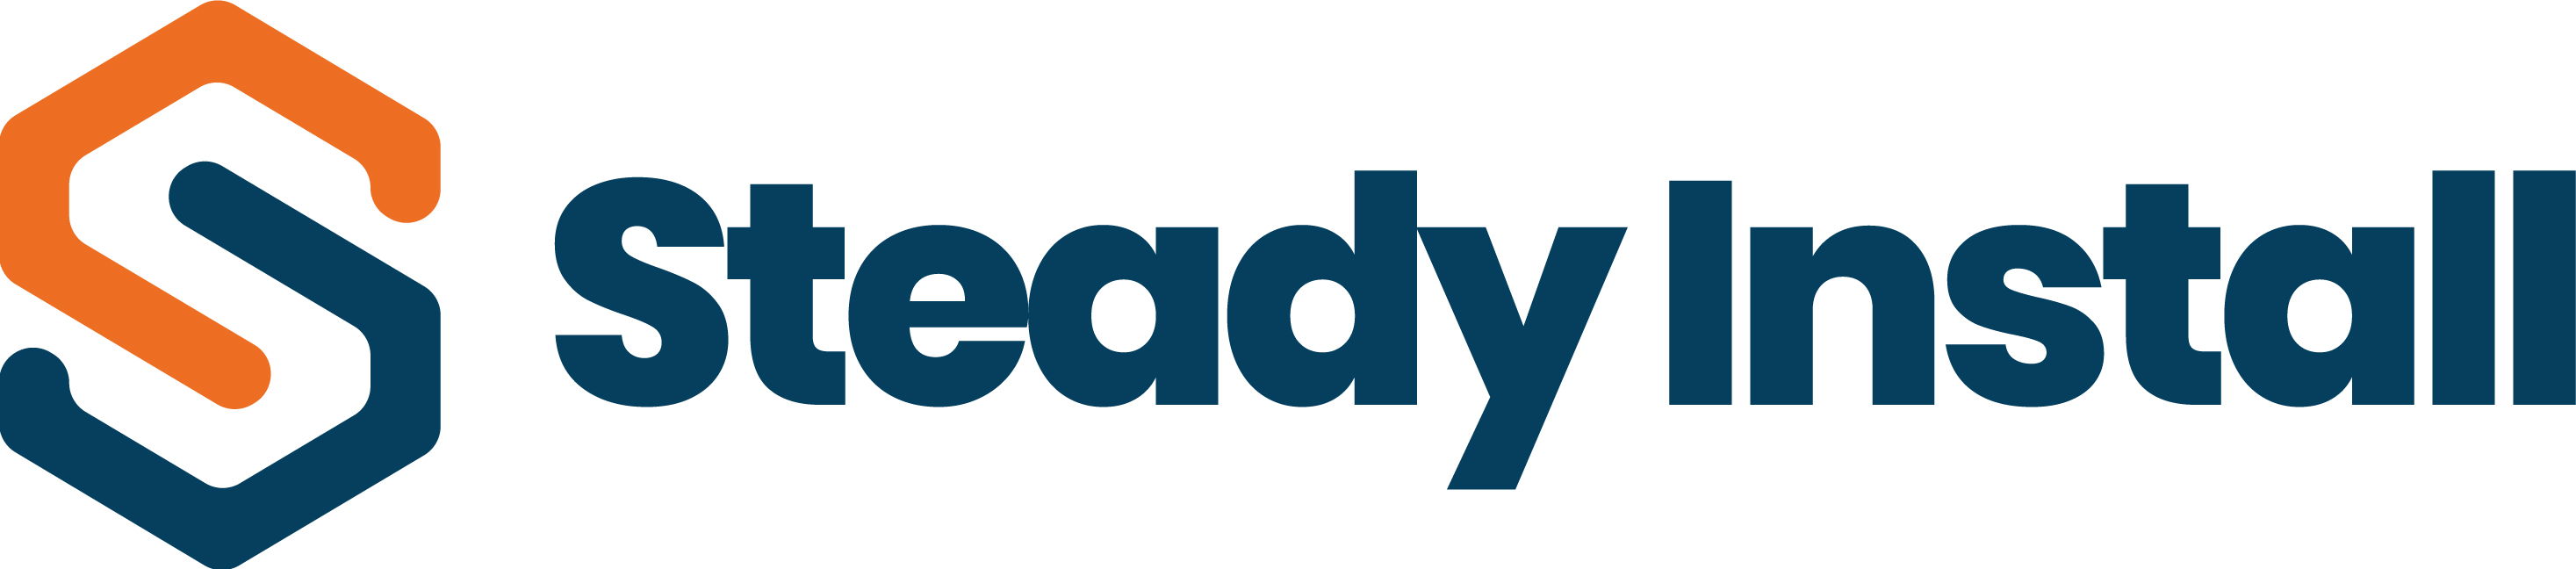 Steady Install logo